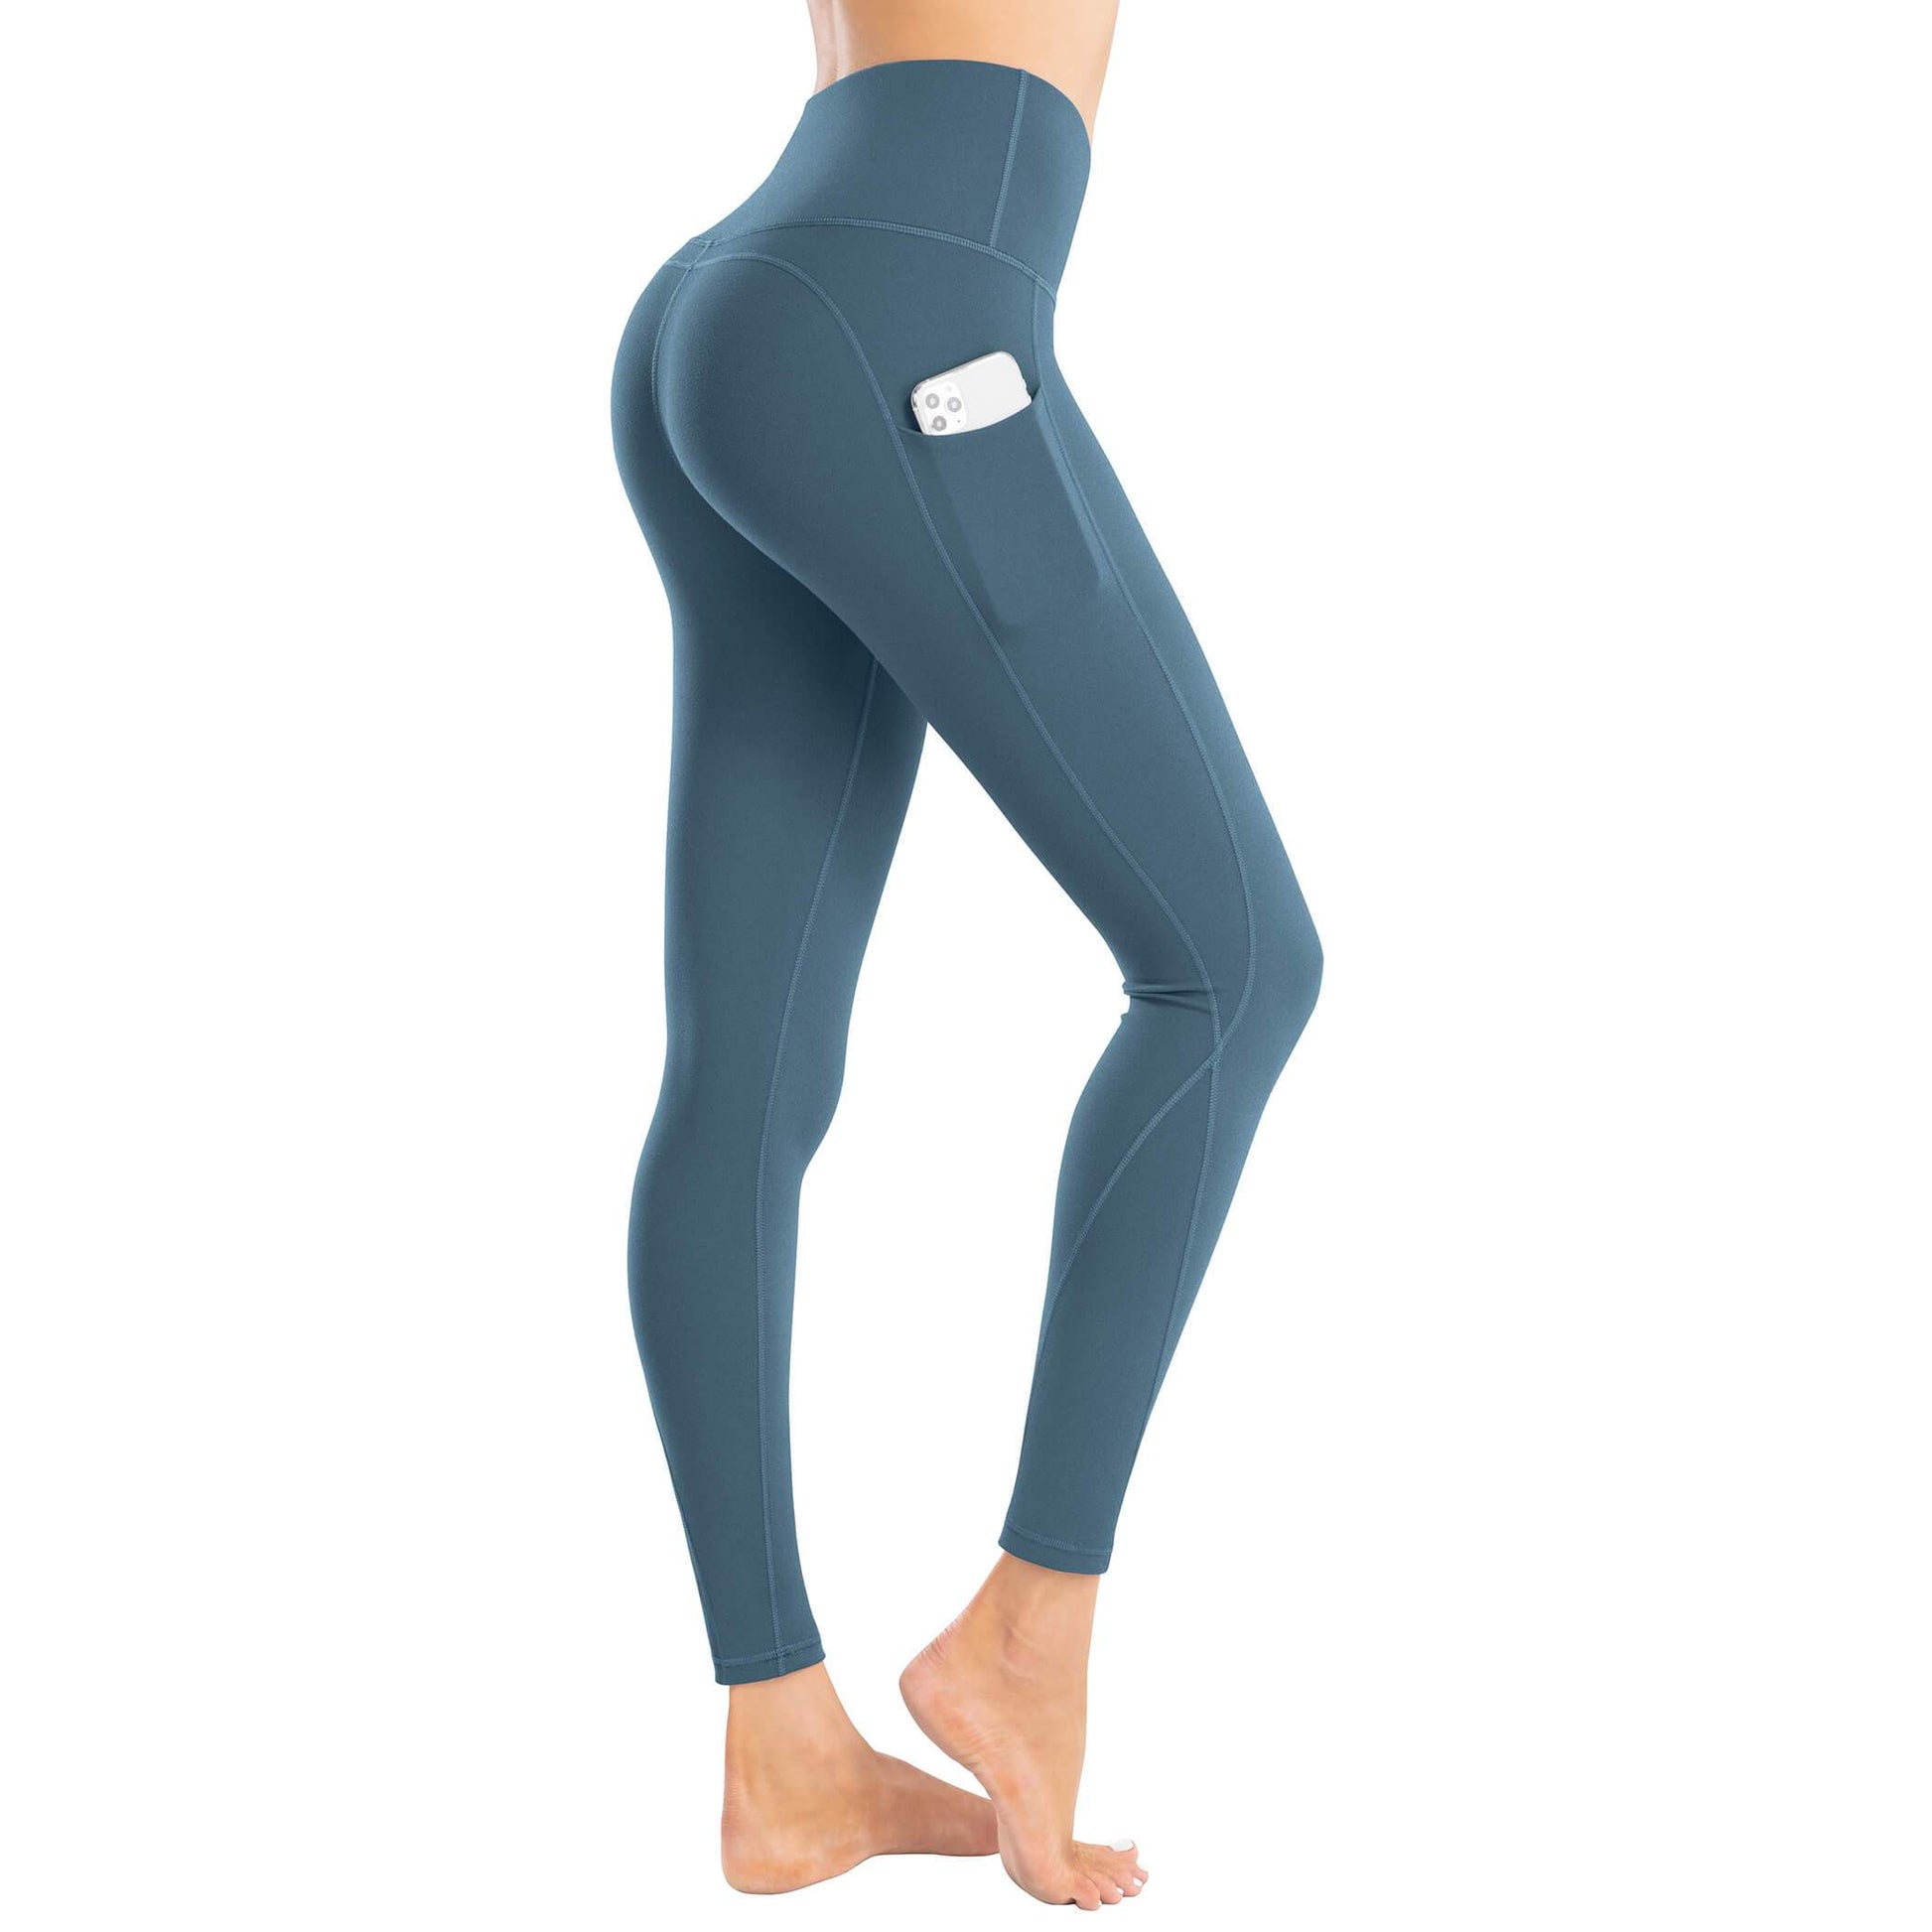 LifeSky Yoga Pants for Women, High Waisted Tummy Iceland